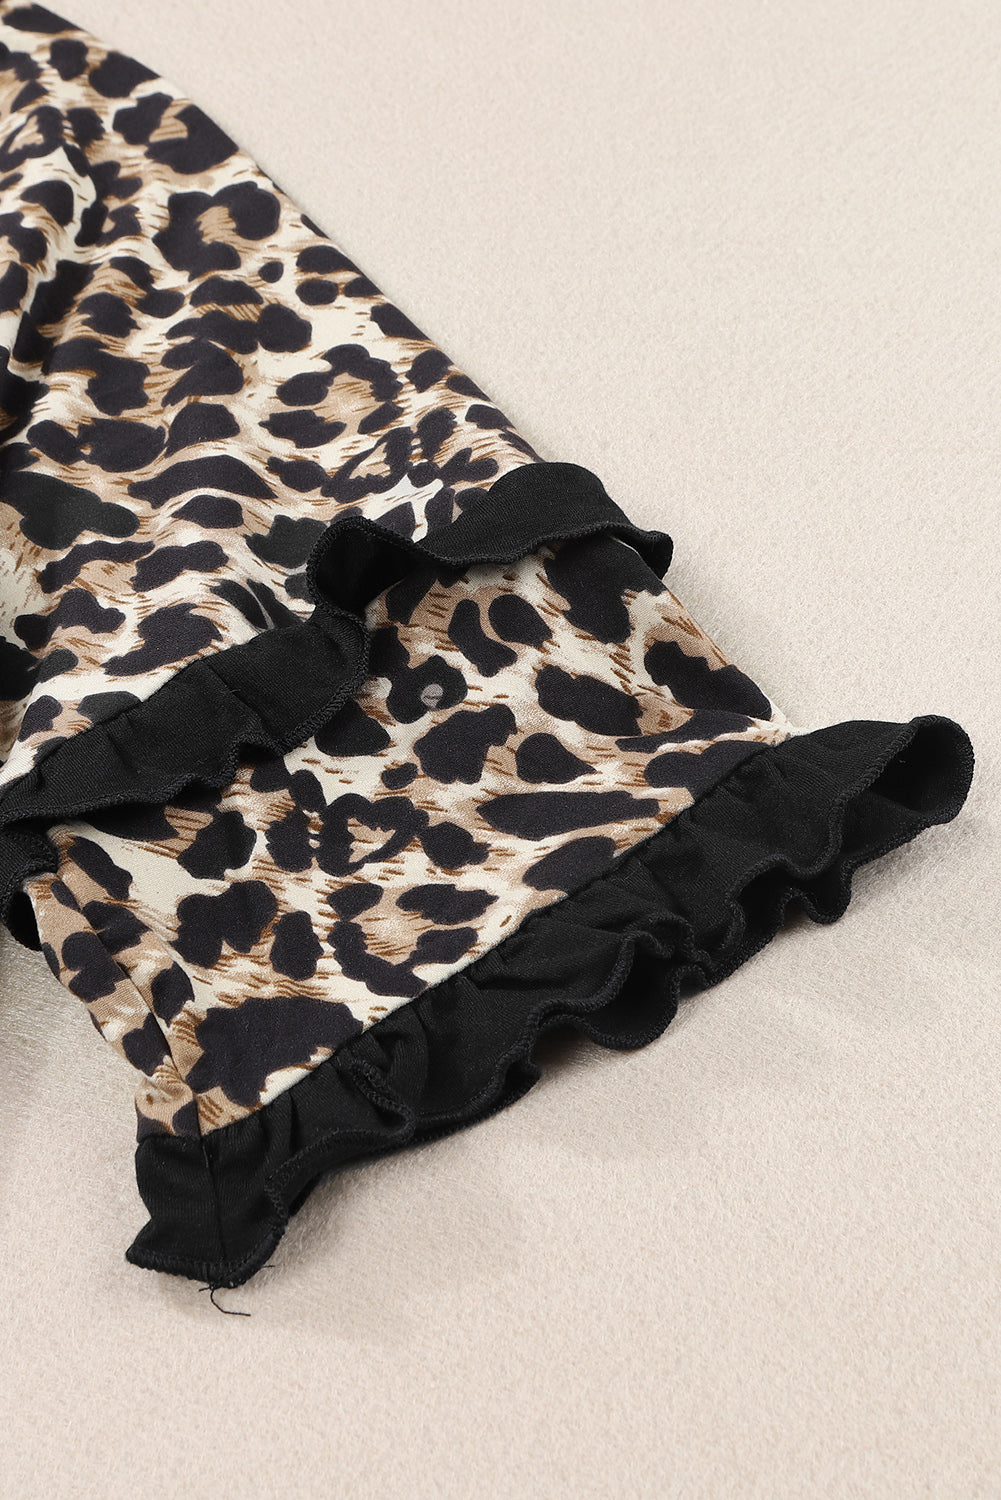 Black Ruffled Leopard Sleeve Patchwork Top